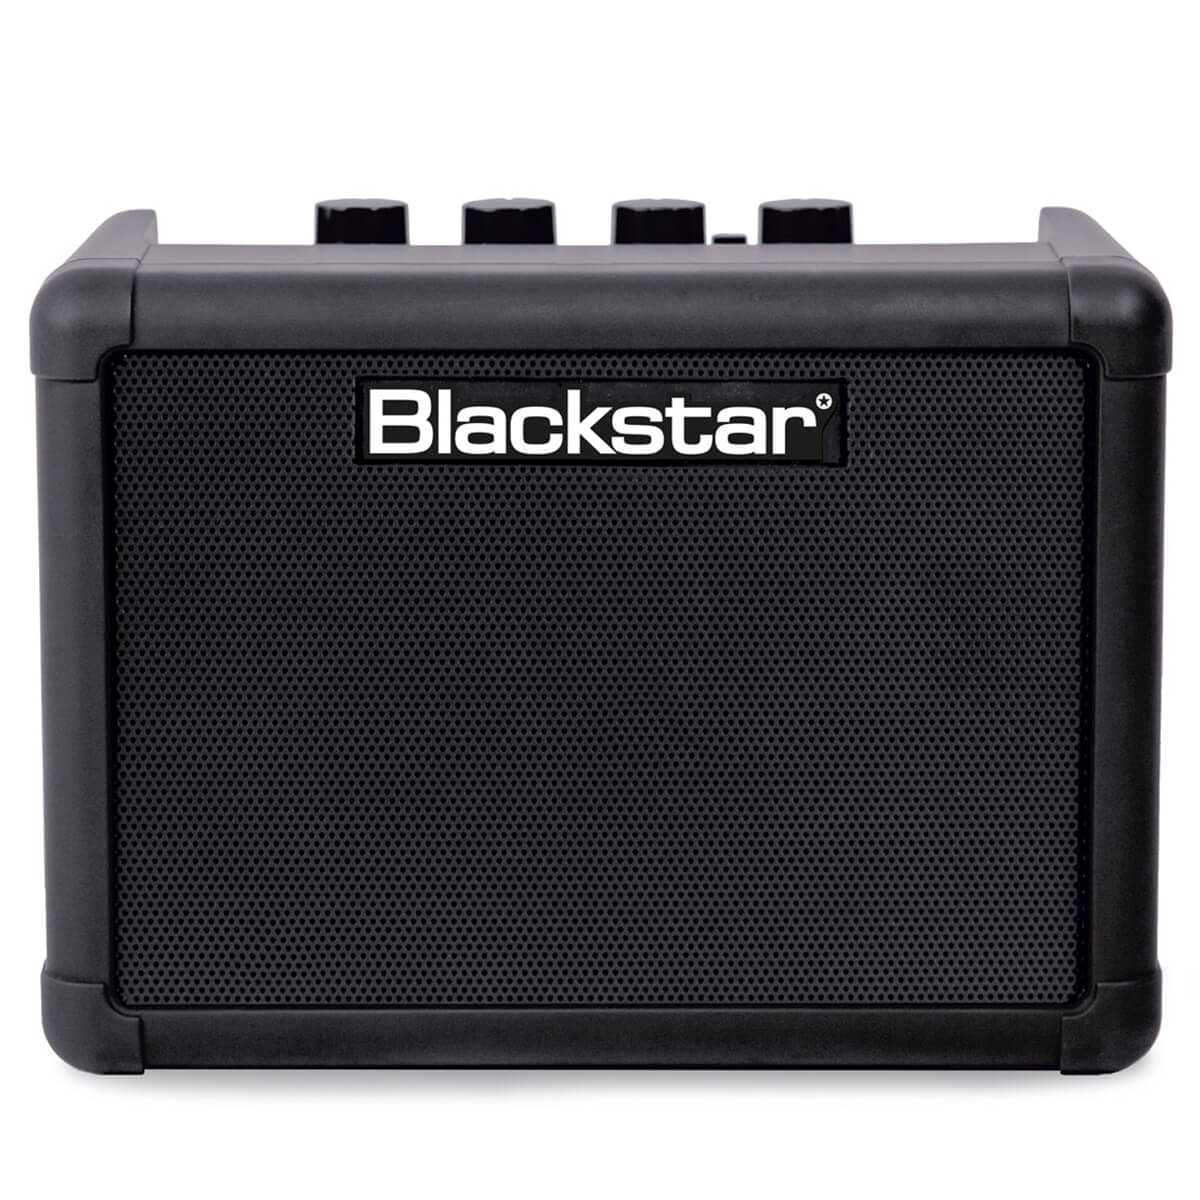 Blackstar Amps FLY 3 Bluetooth mini guitar amplifier front